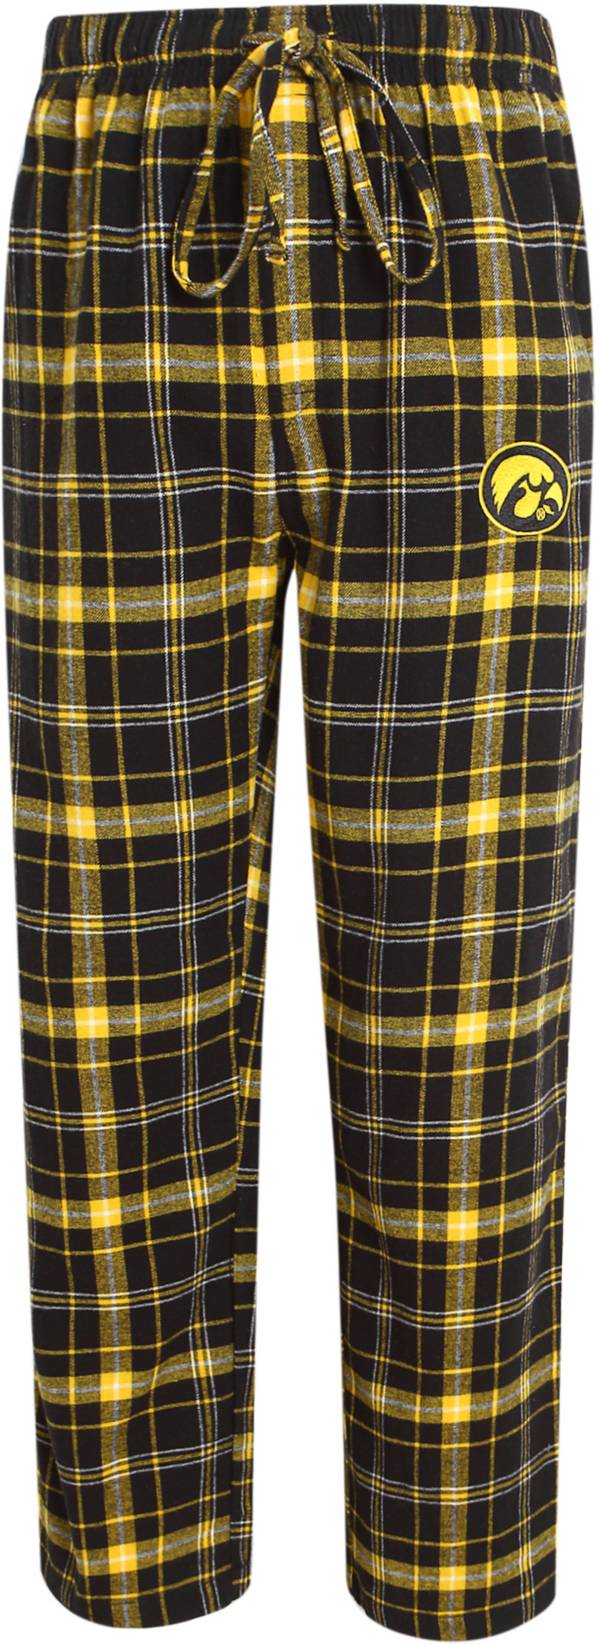 Profile Varsity Men's Iowa Hawkeyes Grey Plaid Sleep Pants – Big and Tall product image